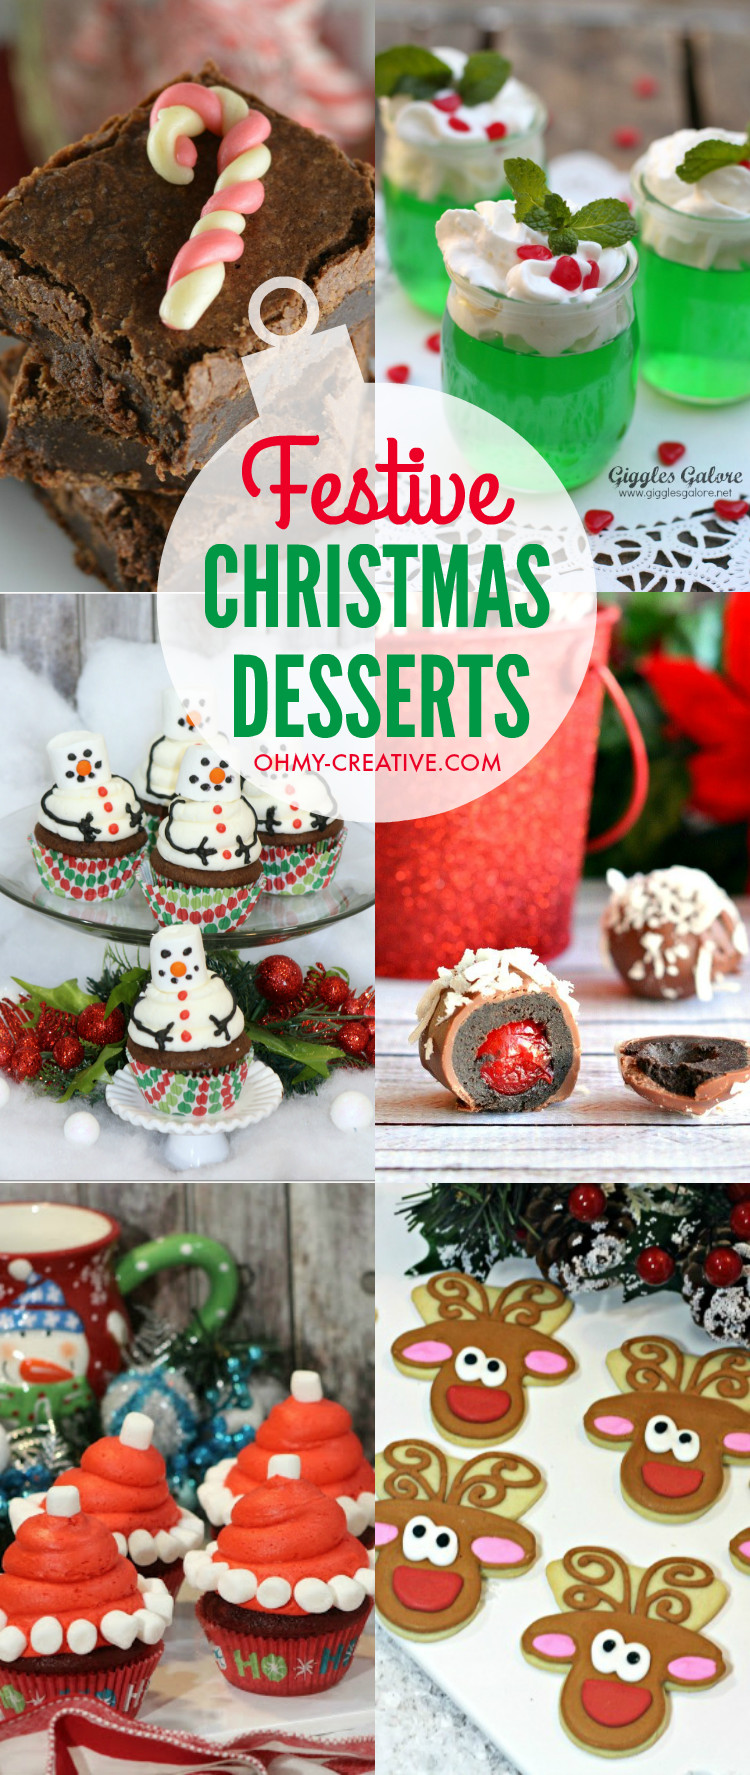 Creative Christmas Desserts
 Festive Christmas Desserts Oh My Creative